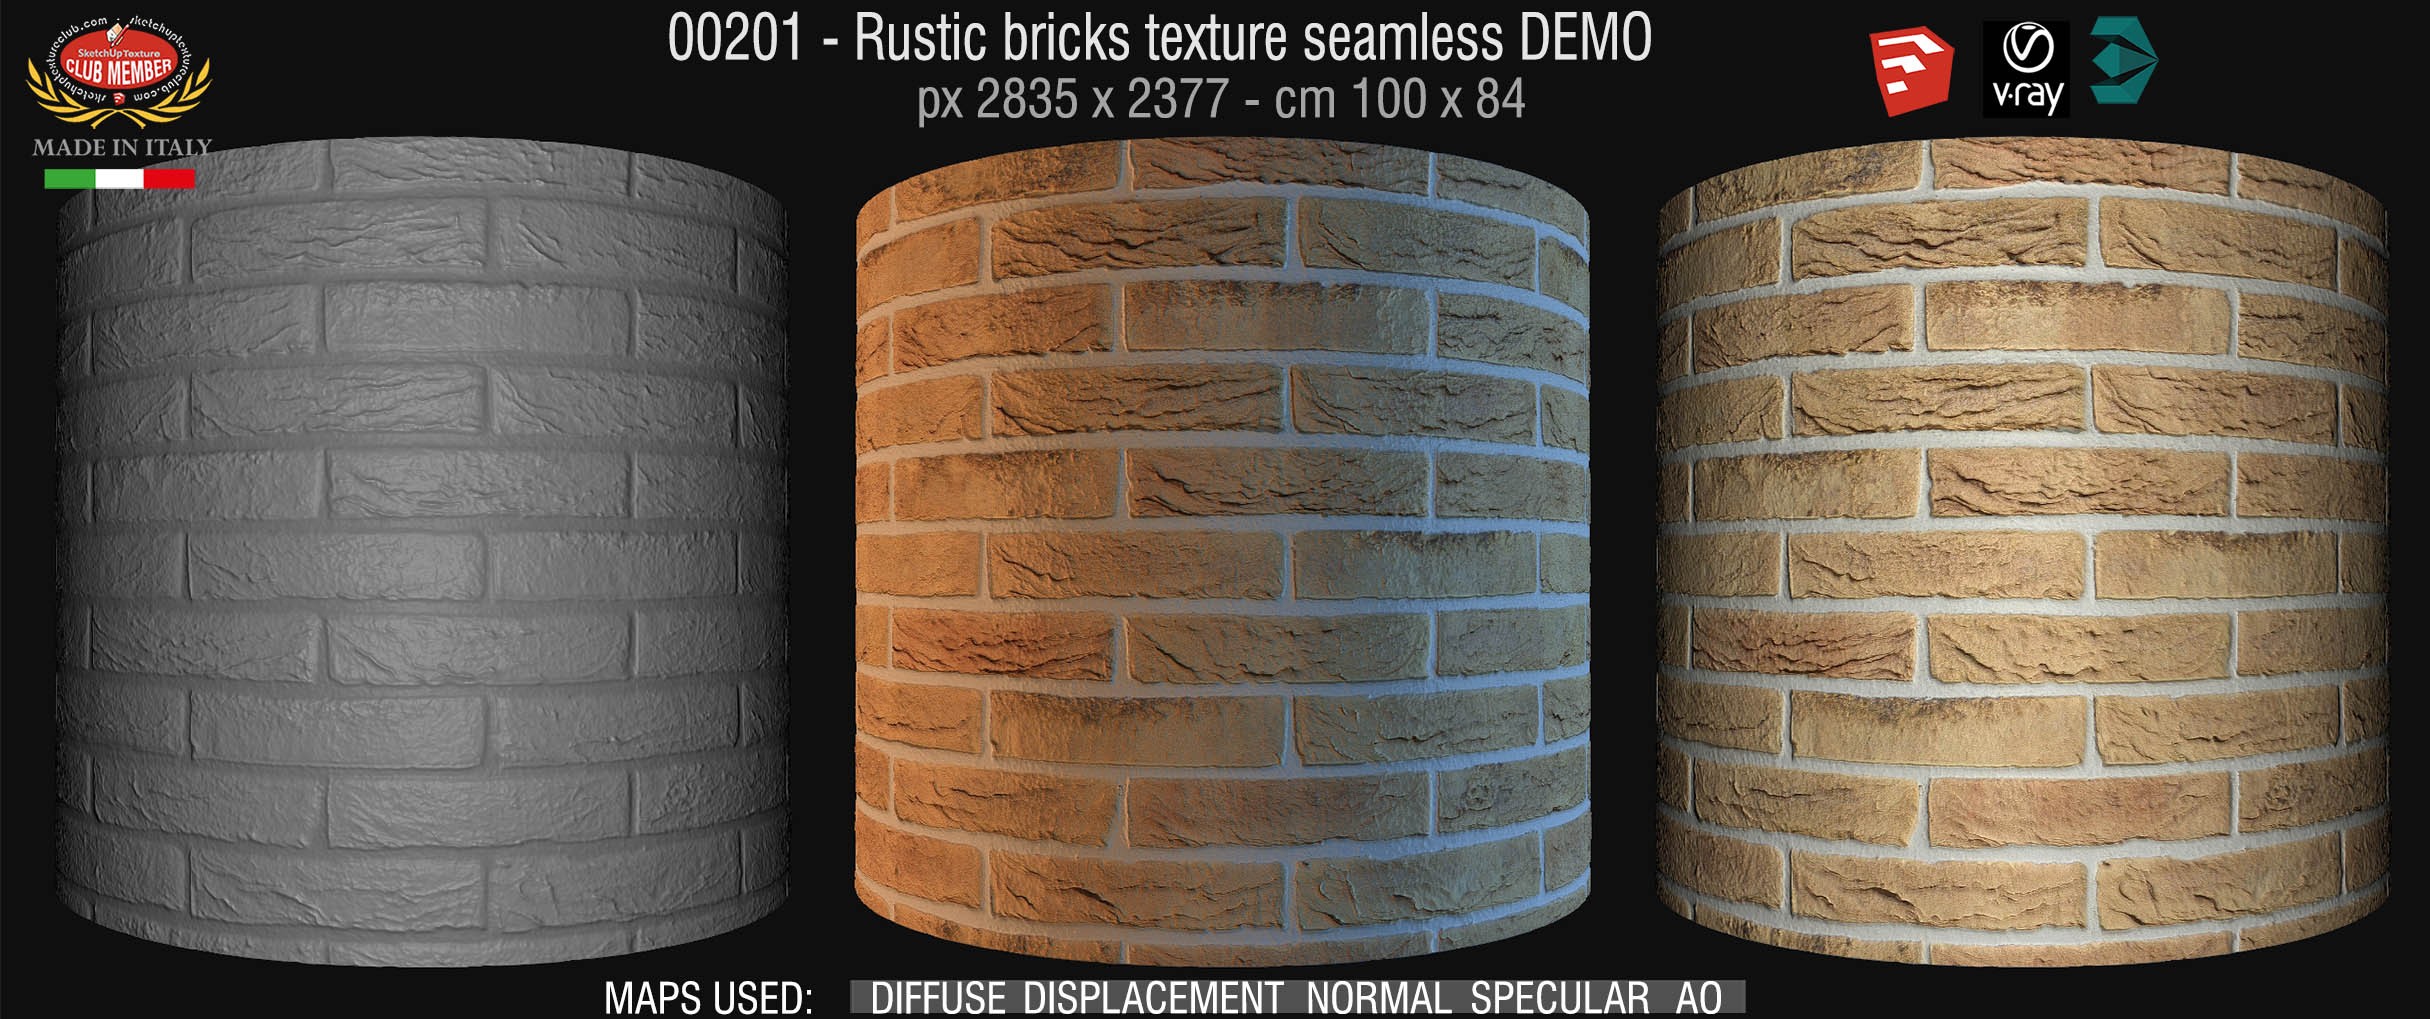 00201 Rustic bricks texture seamless + maps DEMO